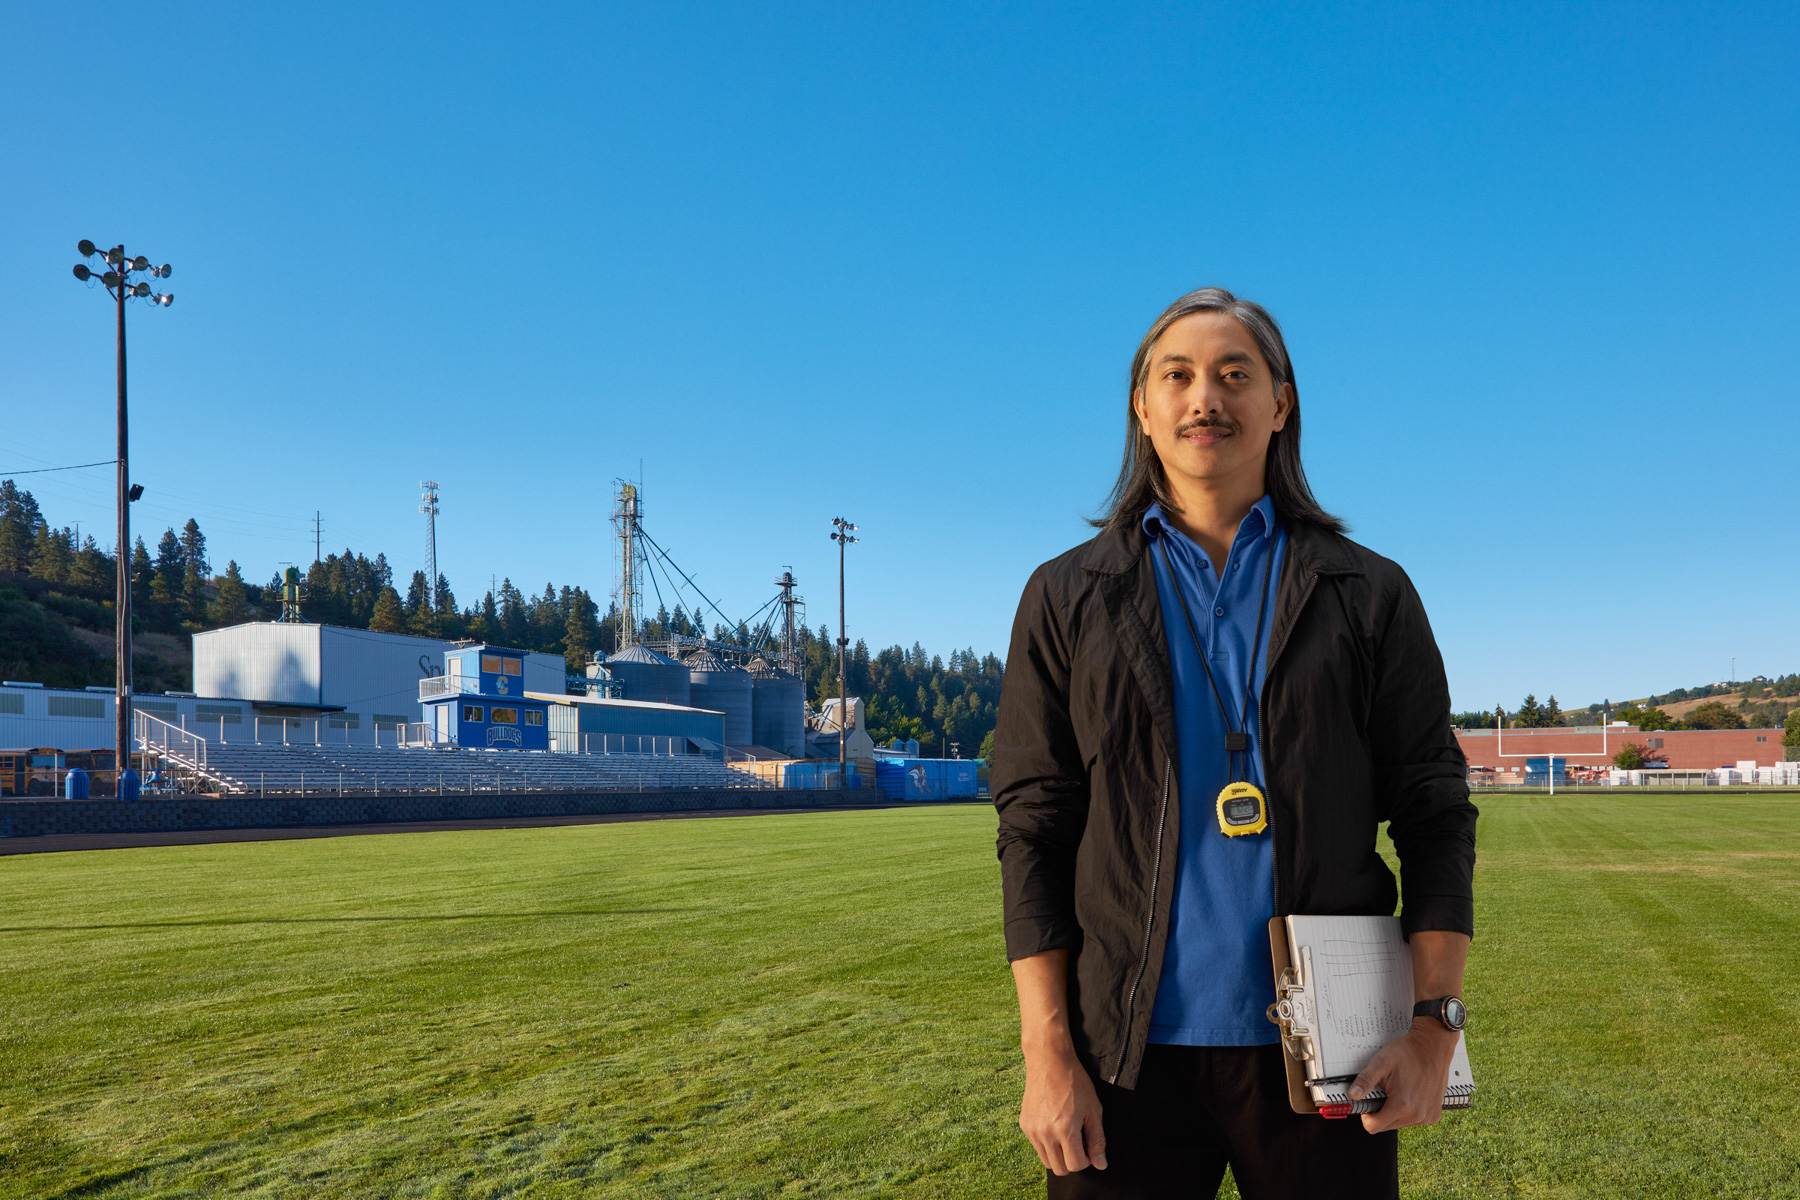 Football coach with timer on football field in Colfax, Washington